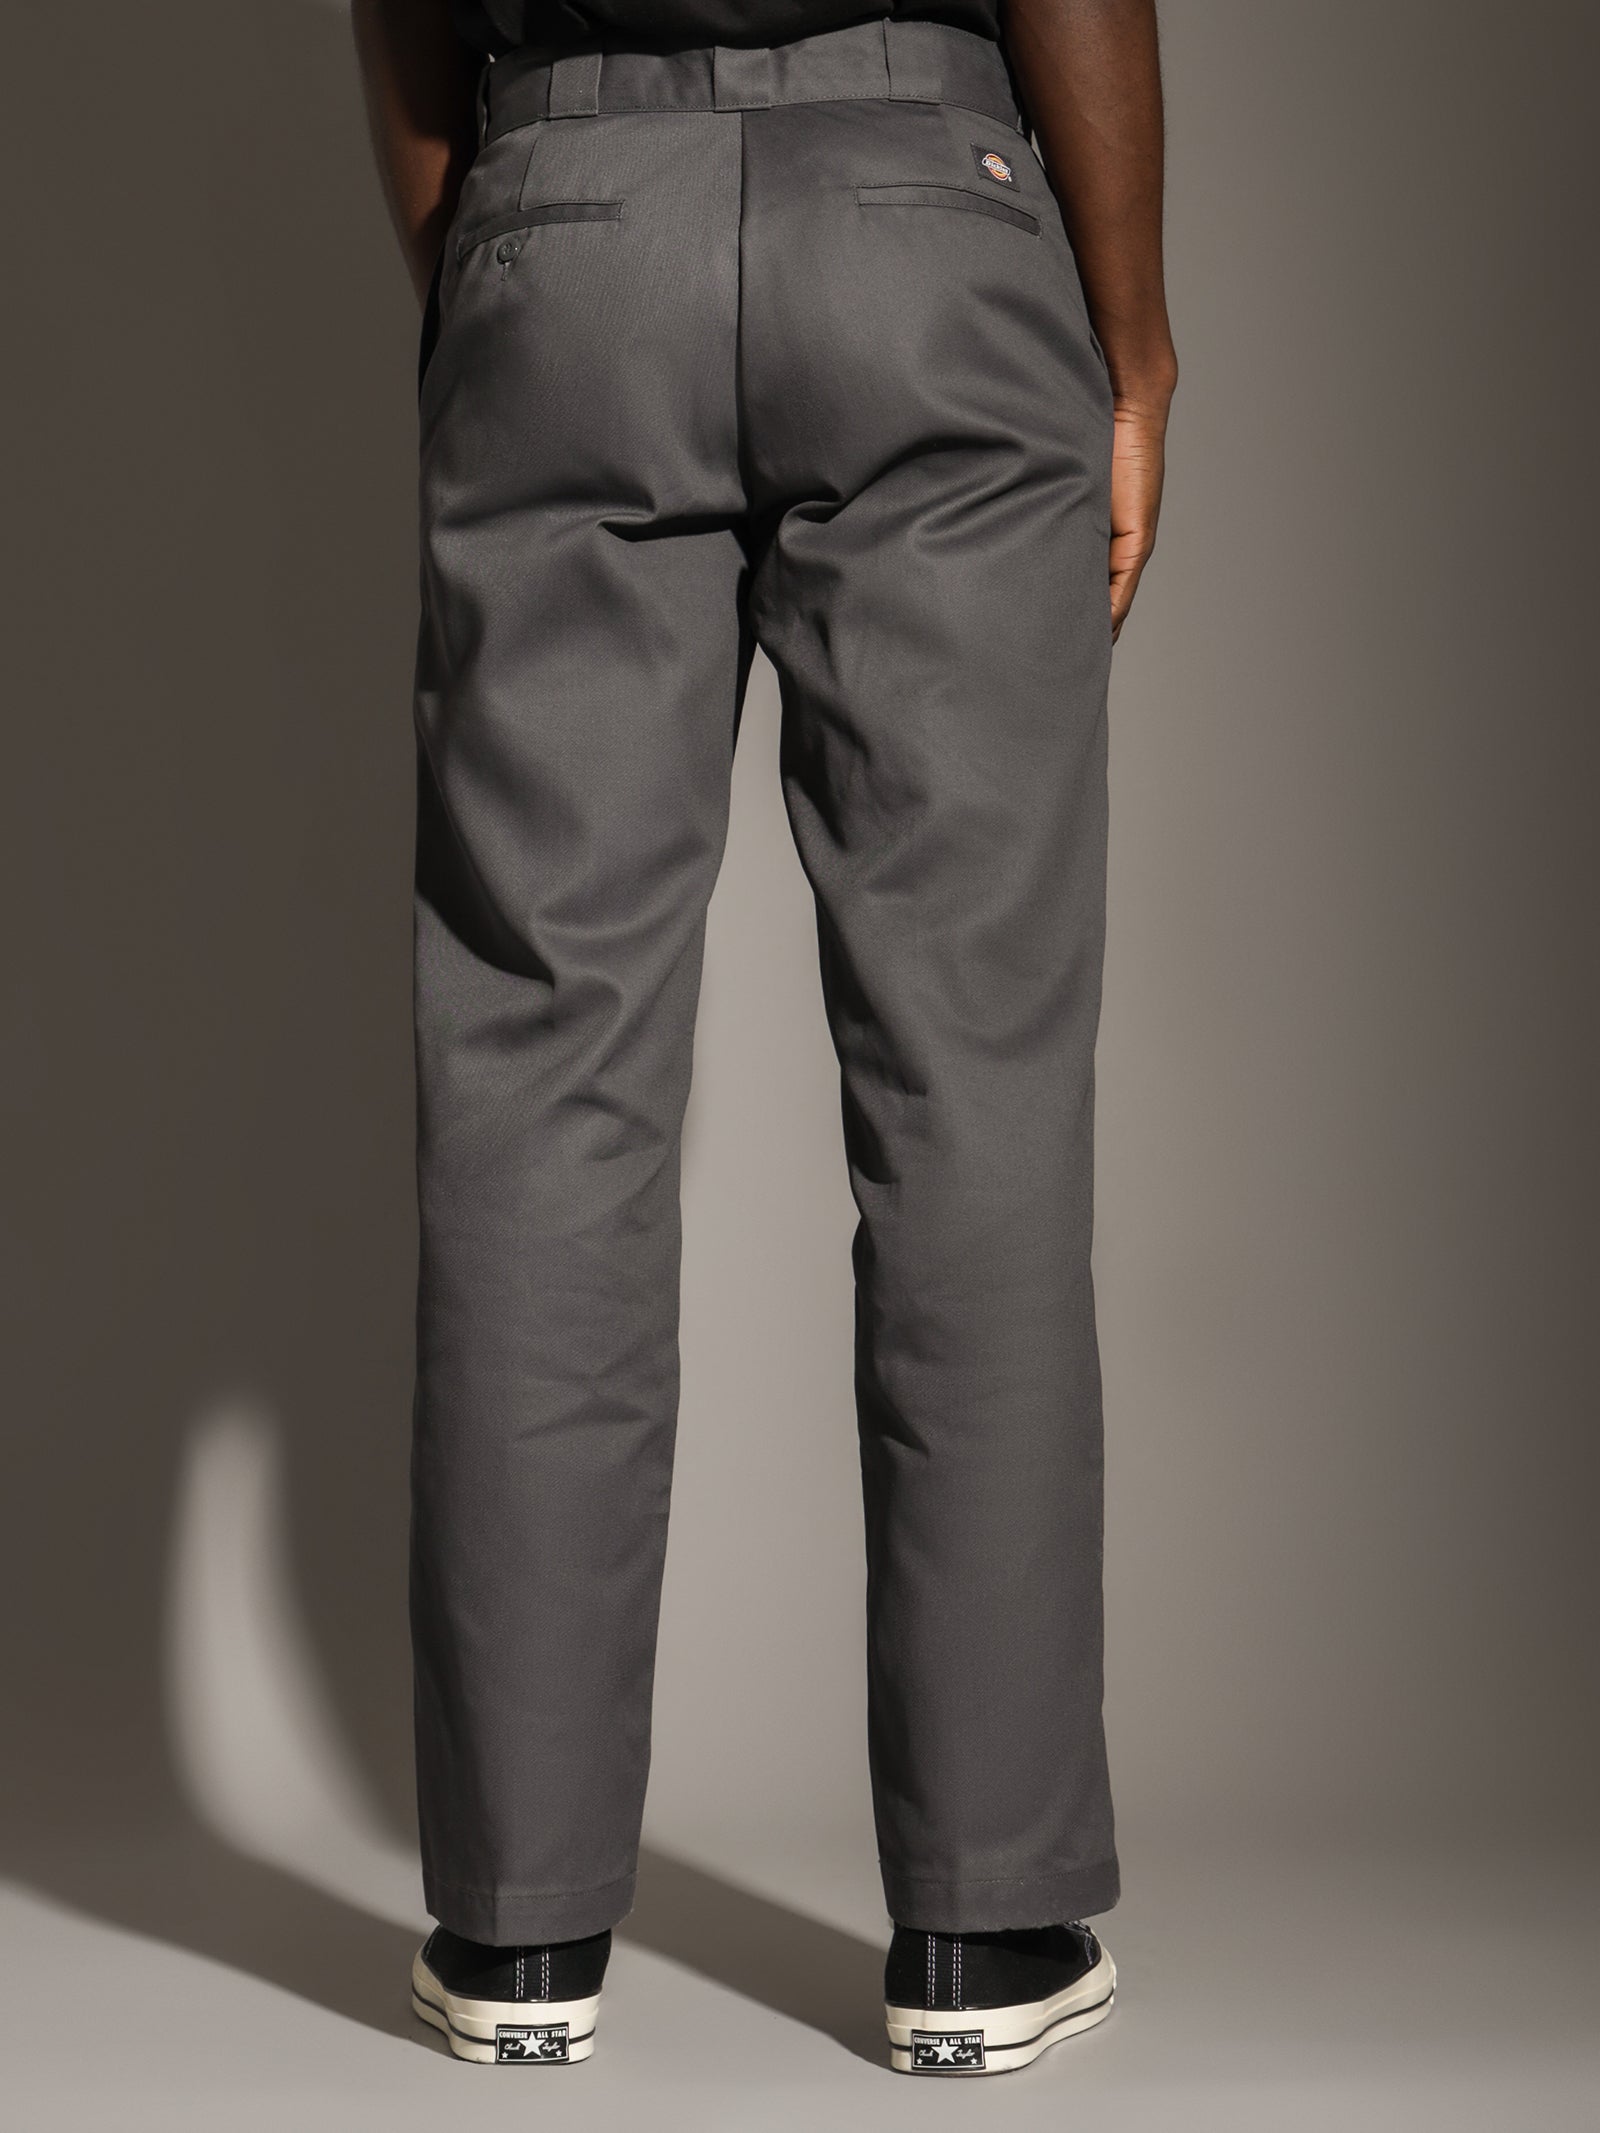 Original 874 Work Pants in Charcoal Grey - Glue Store